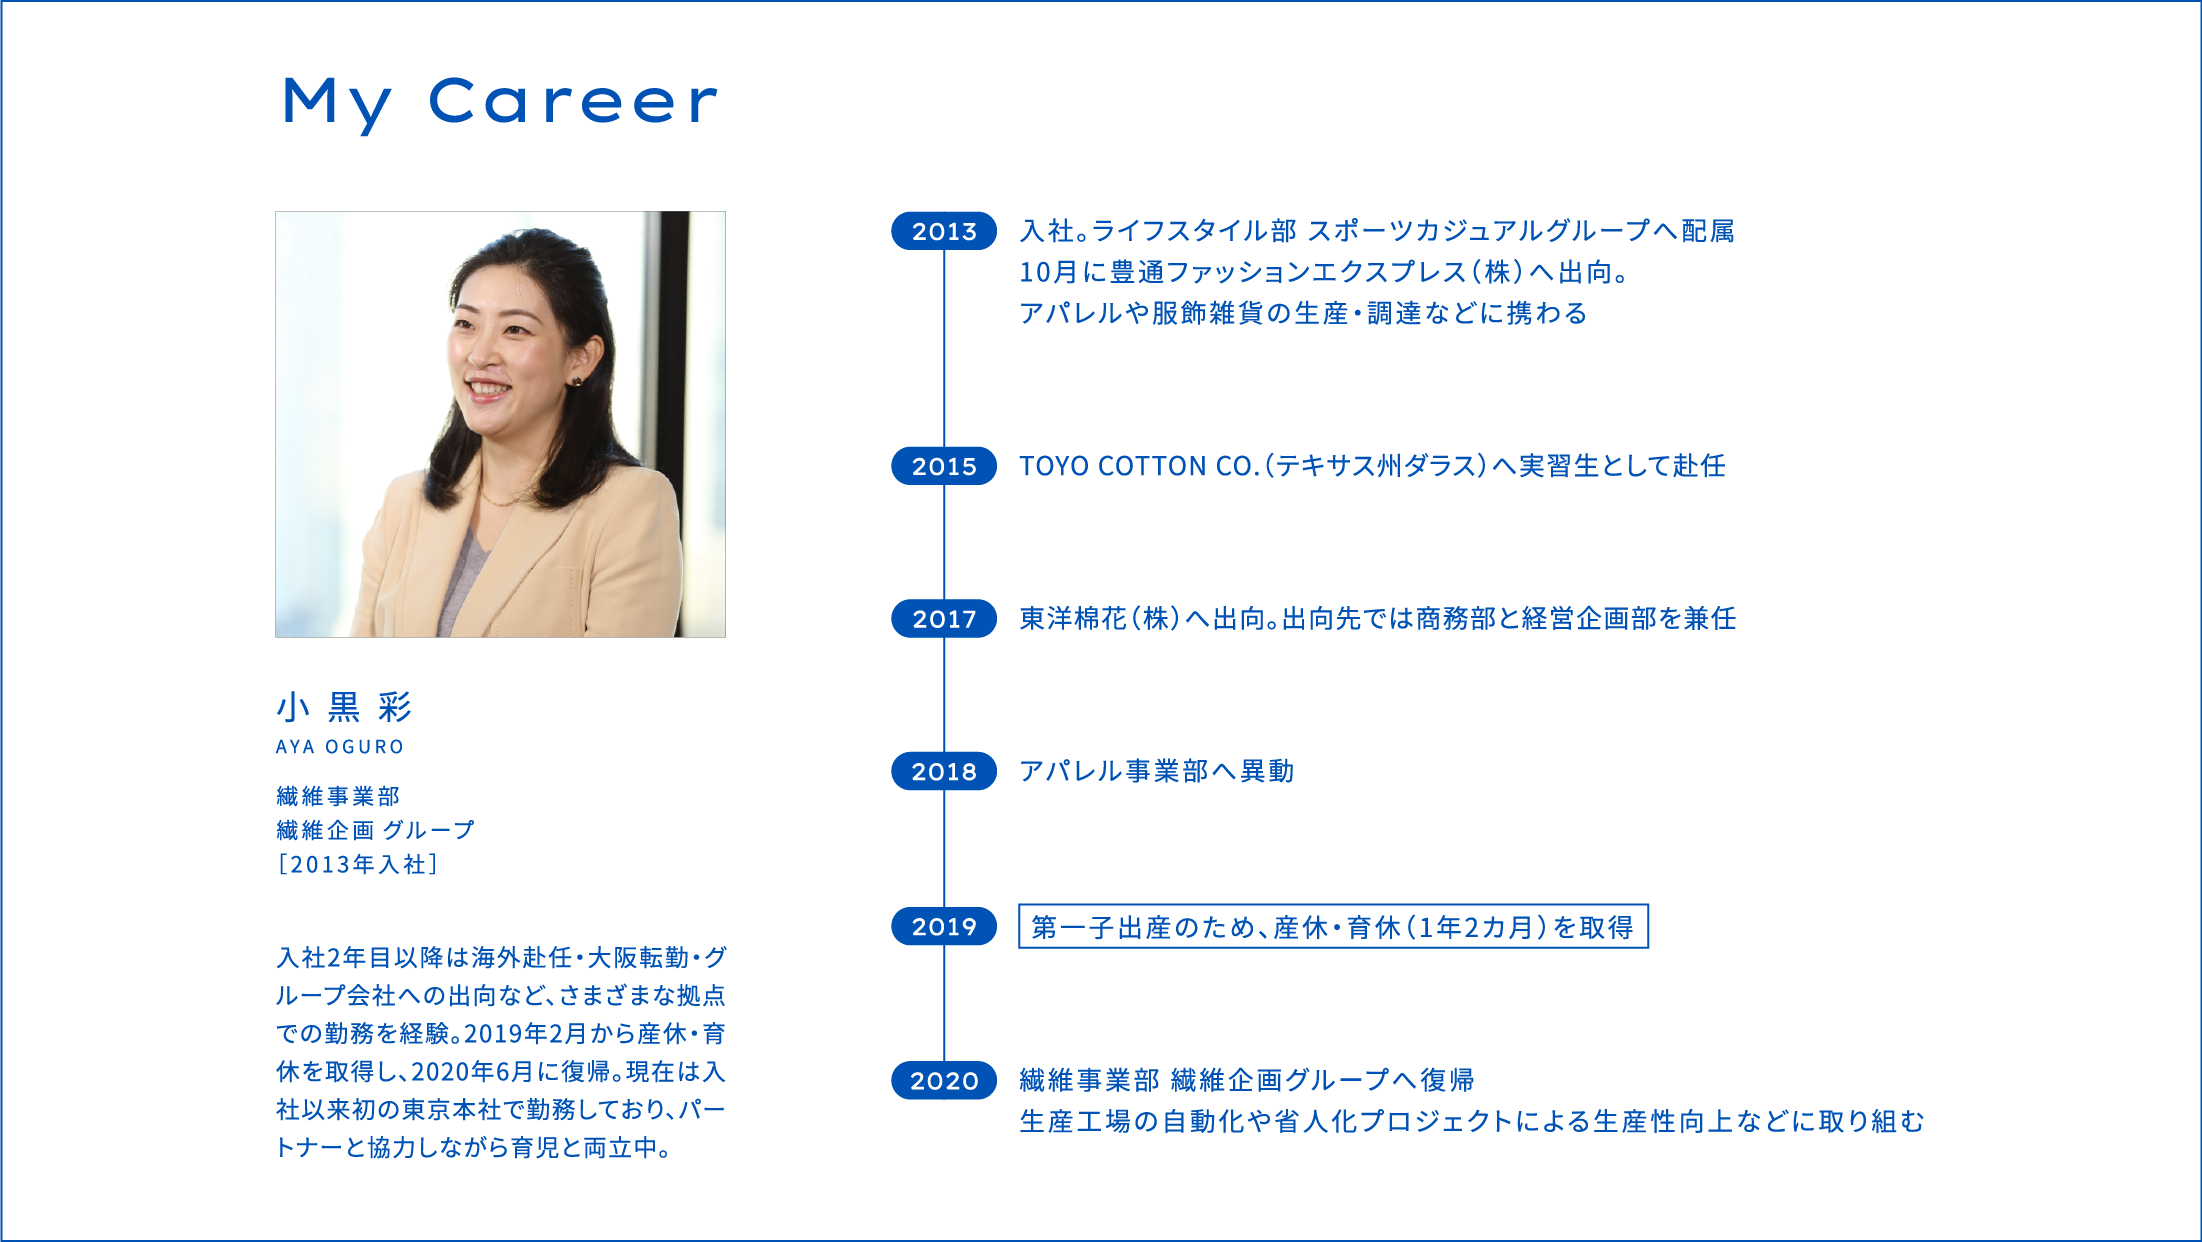 My Career 小黒彩AYA OGURO 繊維事業部 繊維企画	グループ [2013年入社］ 入社2年目以降は海外赴任・大阪転勤・グループ会社への出向など、さまざまな拠点での勤務を経験。2019年2月から産休・育休を取得し、2020年6月に復帰。現在は入社以来初の東京本社で勤務しており、パートナーと協力しながら育児と両立中。2013 入社。ライフスタイル部 スポーツカジュアルグループへ配属10月に豊通ファッションエクスプレス（株）へ出向。アパレルや服飾雑貨の生産・調達などに携わる 2015 TOYO COTTON CO.（テキサス州ダラス）へ実習生として赴任 2017 東洋棉花（株）へ出向。出向先では商務部と経営企画部を兼任 2018アパレル事業部へ異動 2019第一子出産のため、産休・育休（1年2カ月）を取得 2020繊維事業部 繊維企画グループへ復帰生産工場の自動化や省人化プロジェクトによる生産性向上などに取り組む